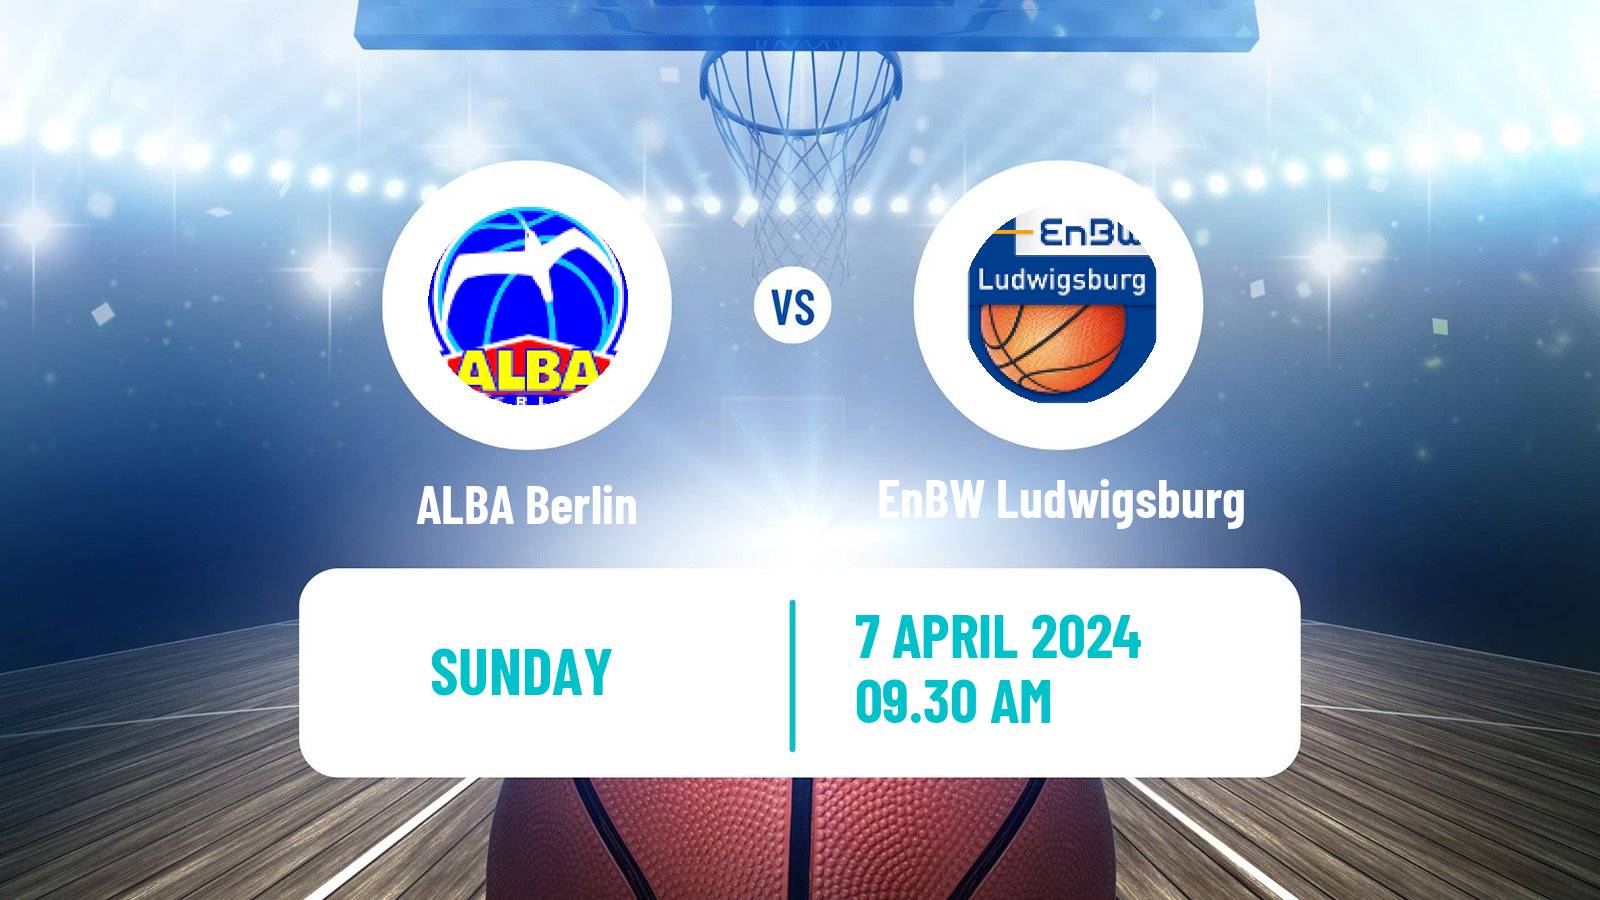 Basketball German BBL ALBA Berlin - EnBW Ludwigsburg